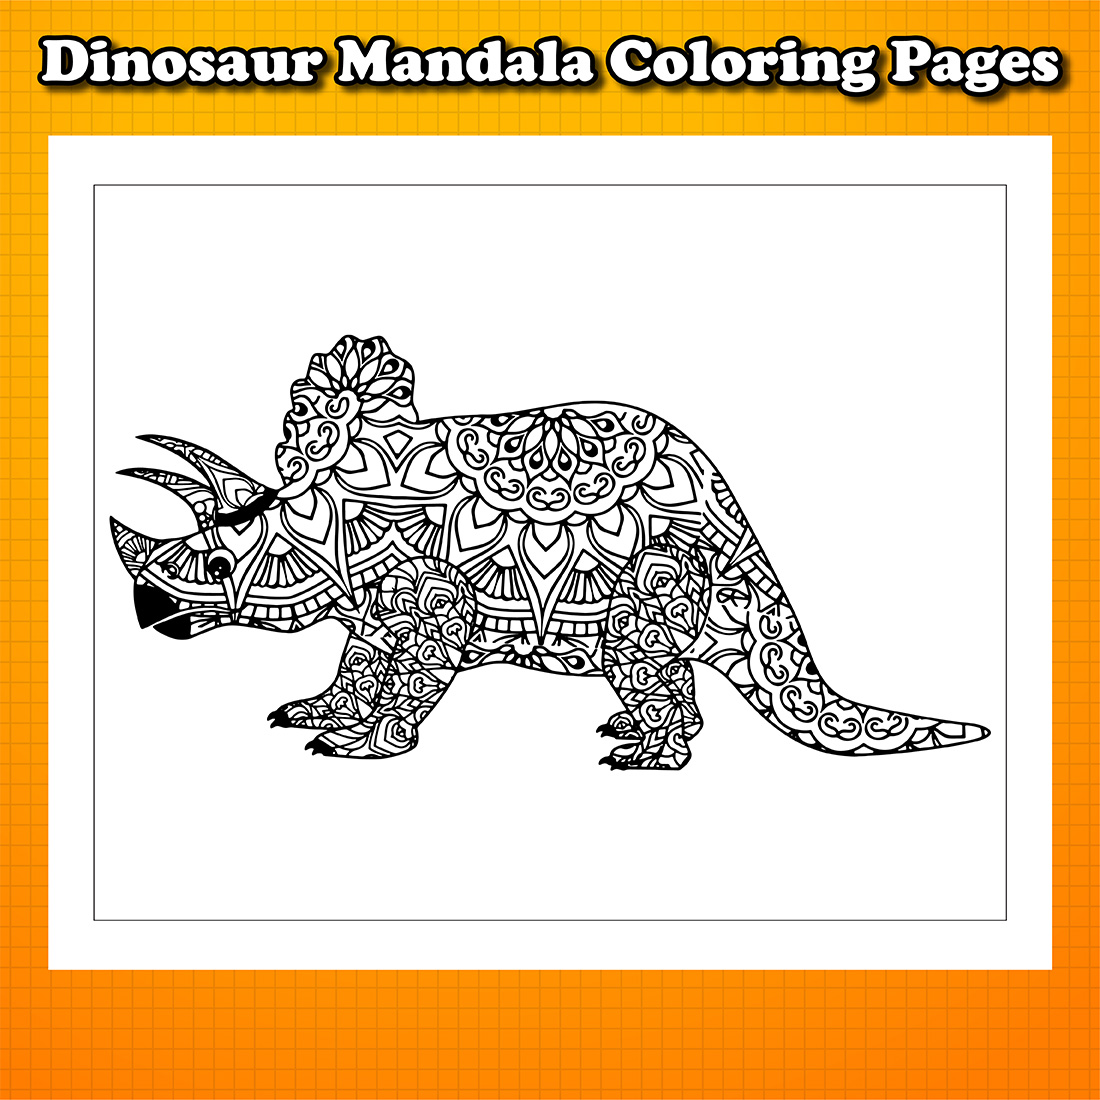 Dinosaur Mandala Coloring Pages cover image.